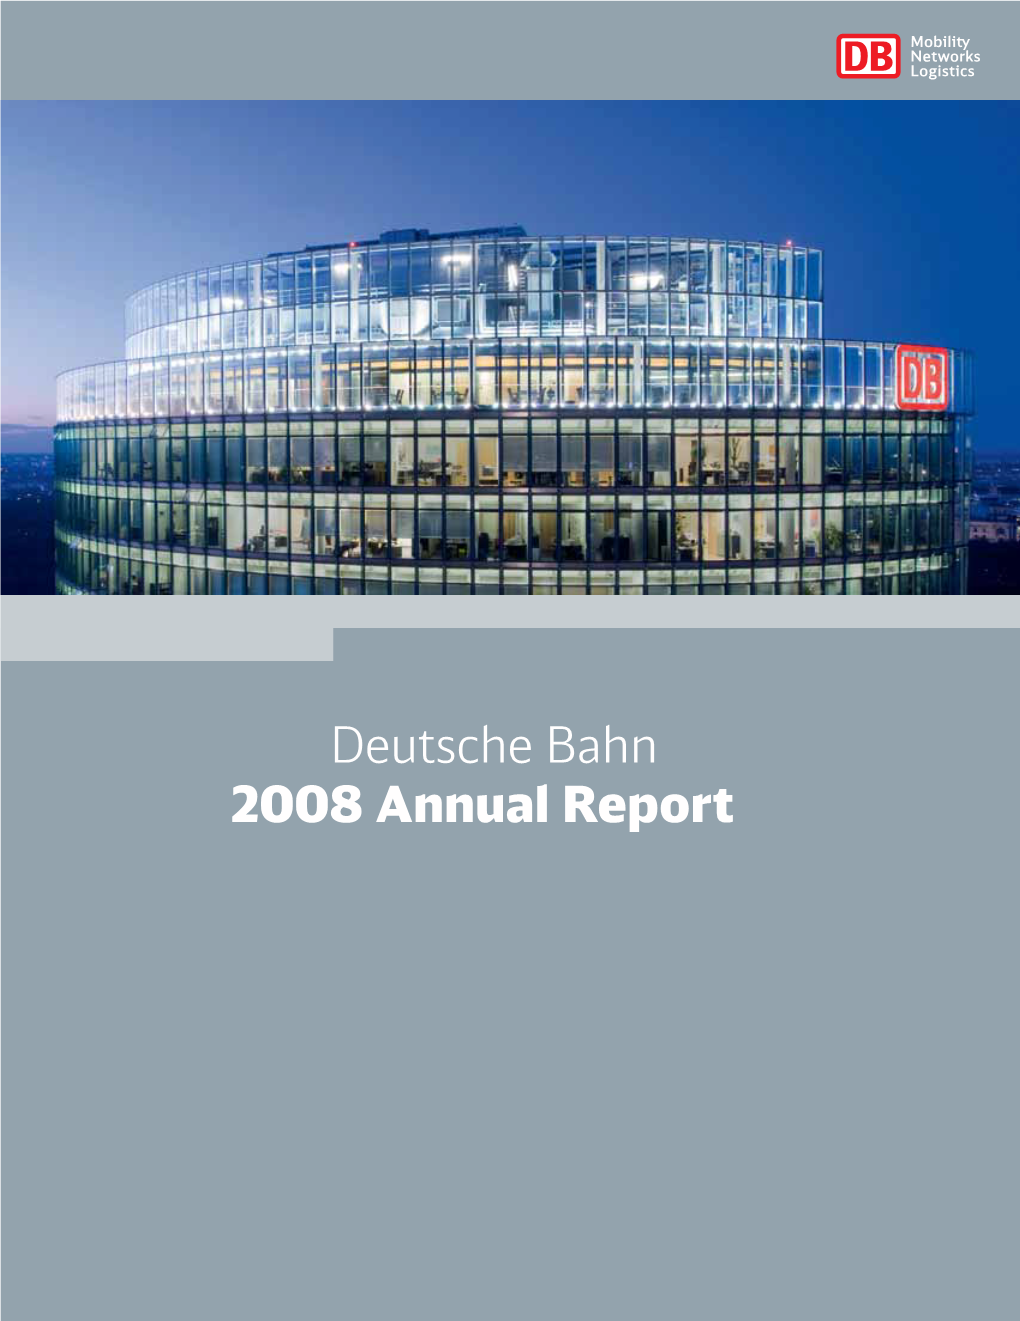 Deutsche Bahn 2008 Annual Report at a GLANCE